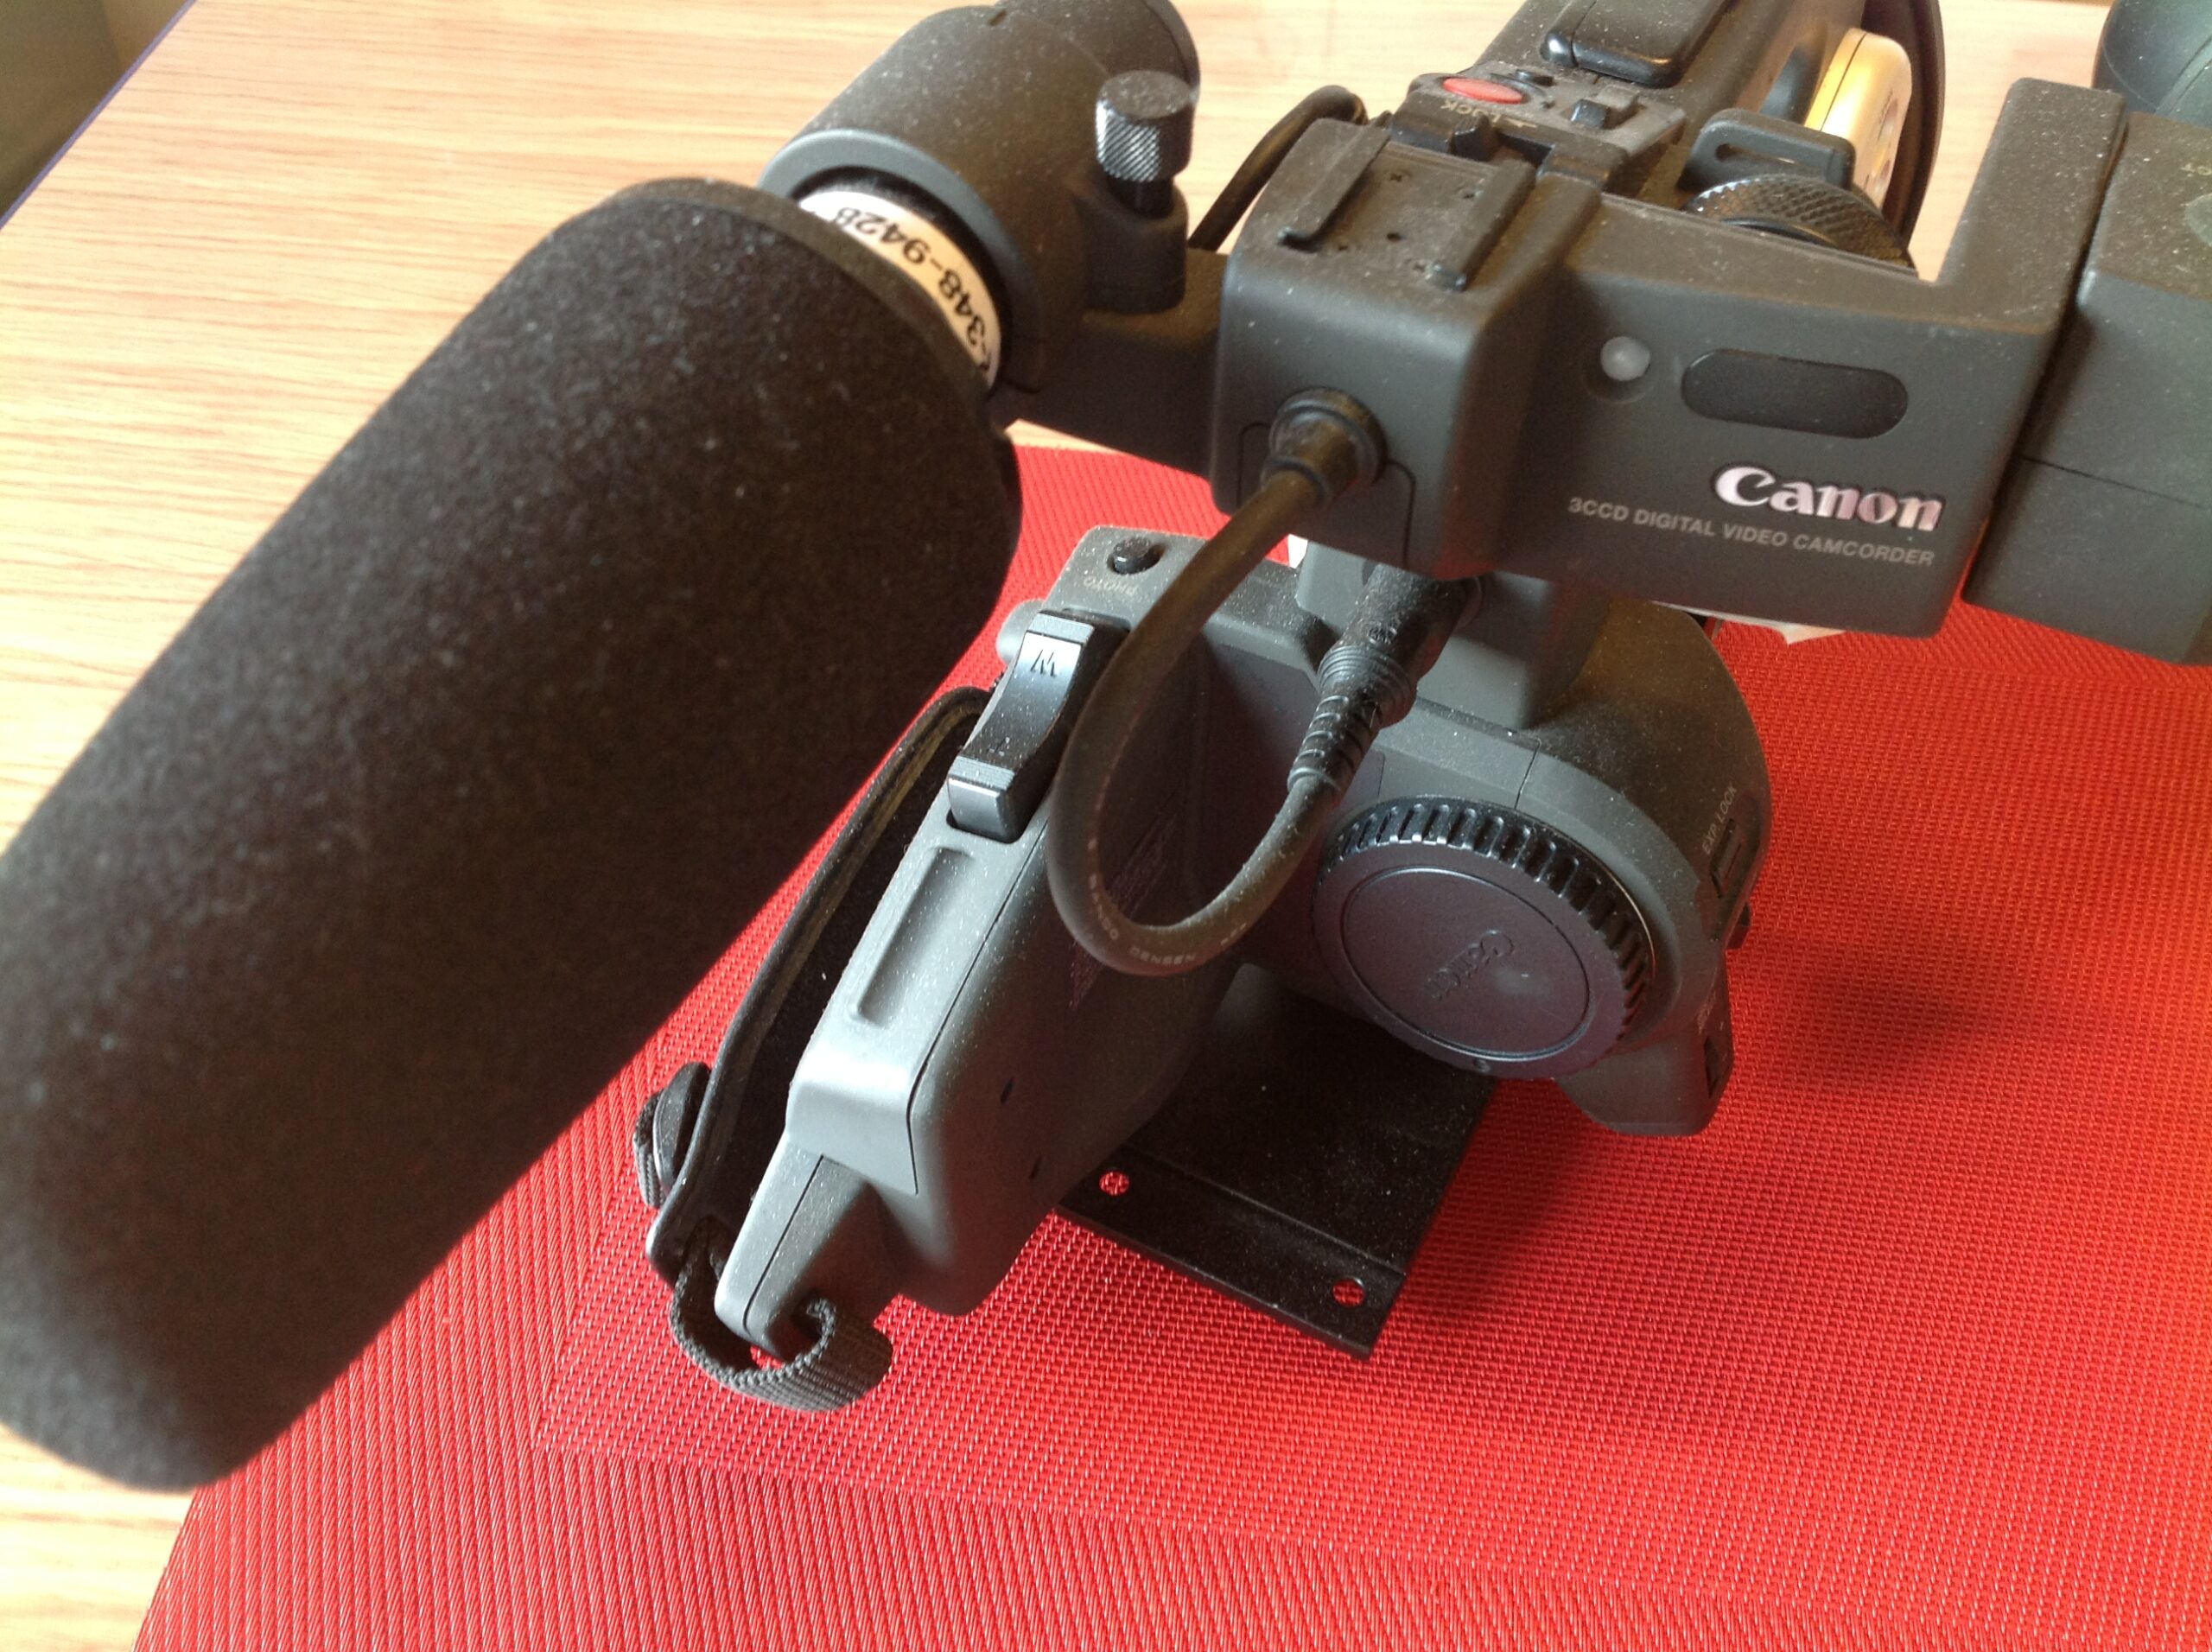 Digitalkamera Canon XL1s, 3CCD Digital Video Camcorder PAl, Komplettausstattung